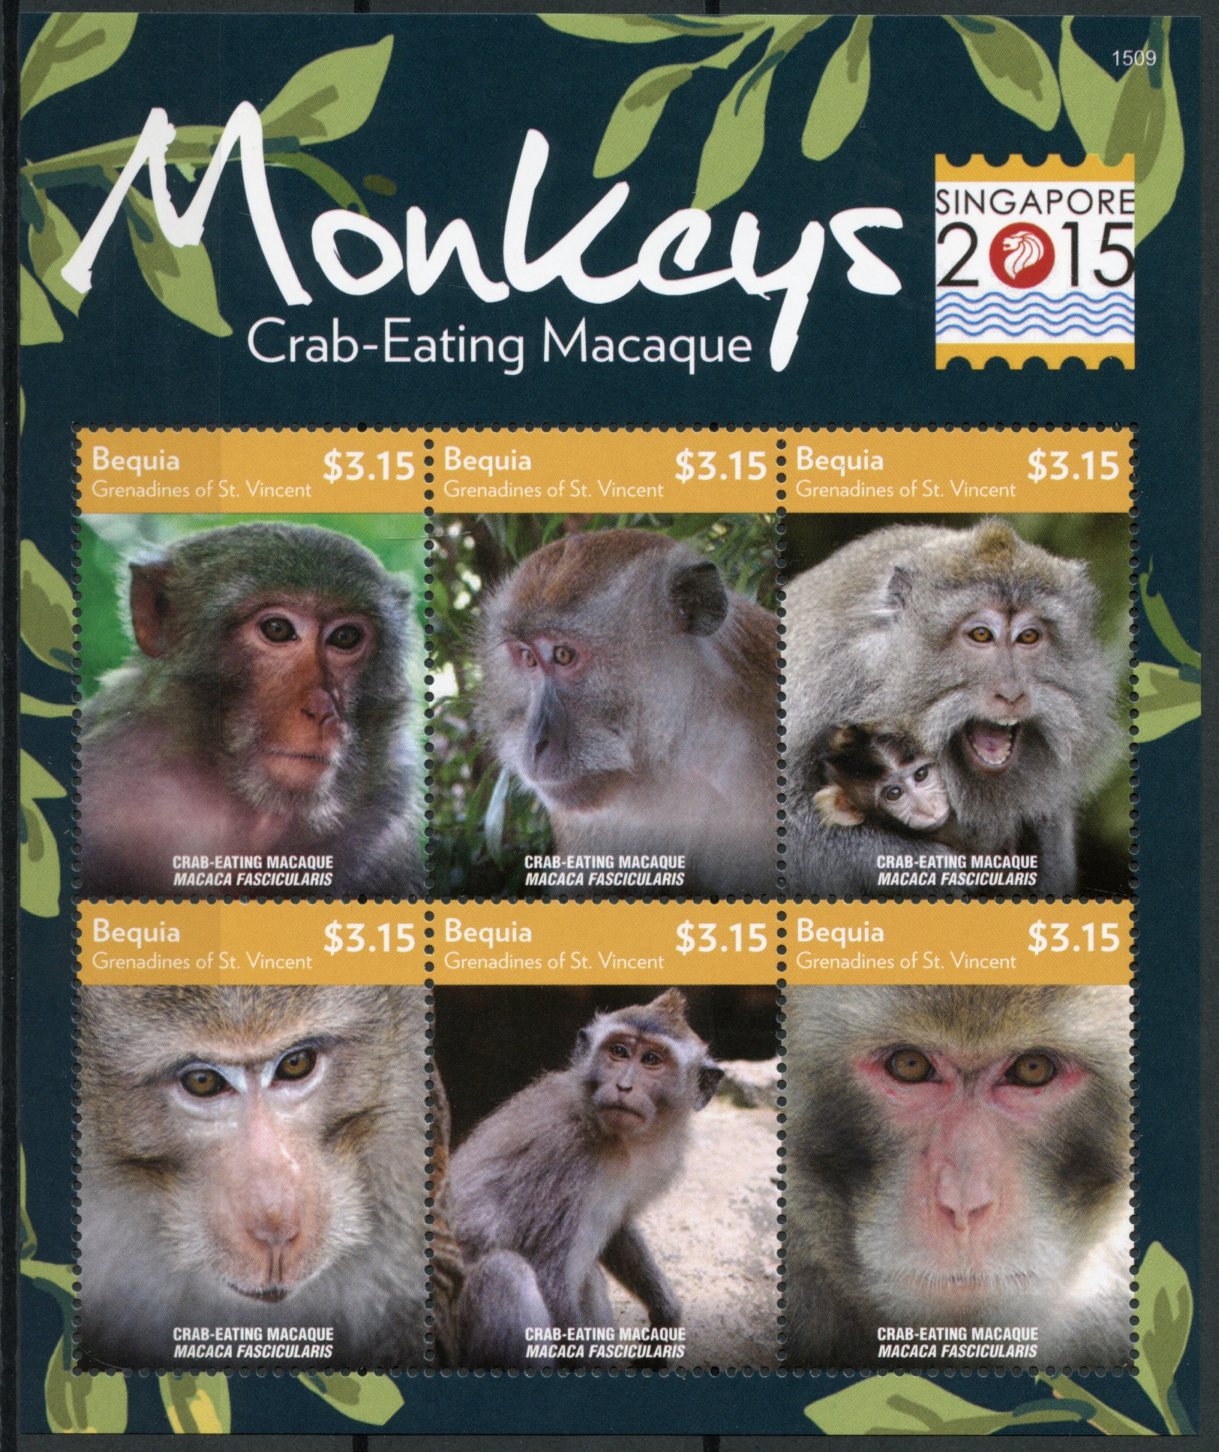 Bequia Gren St Vincent 2015 MNH Monkeys Macaque Singapore 2015 6v M/S Stamps